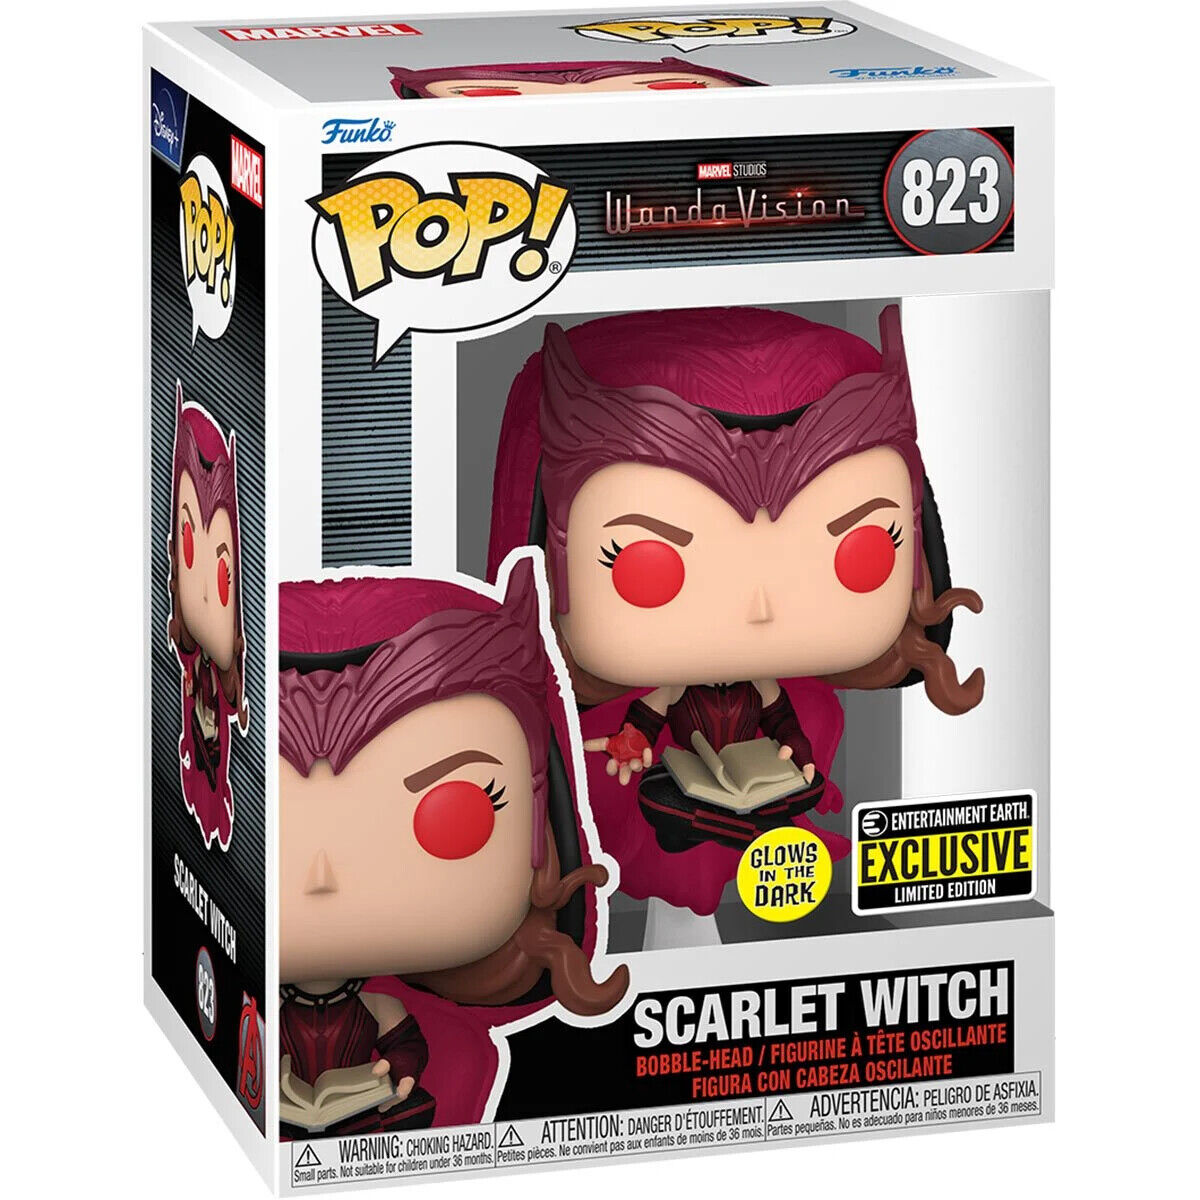 MINT Exclusive WandaVision Scarlet Witch GITD Funko Pop Figure #823